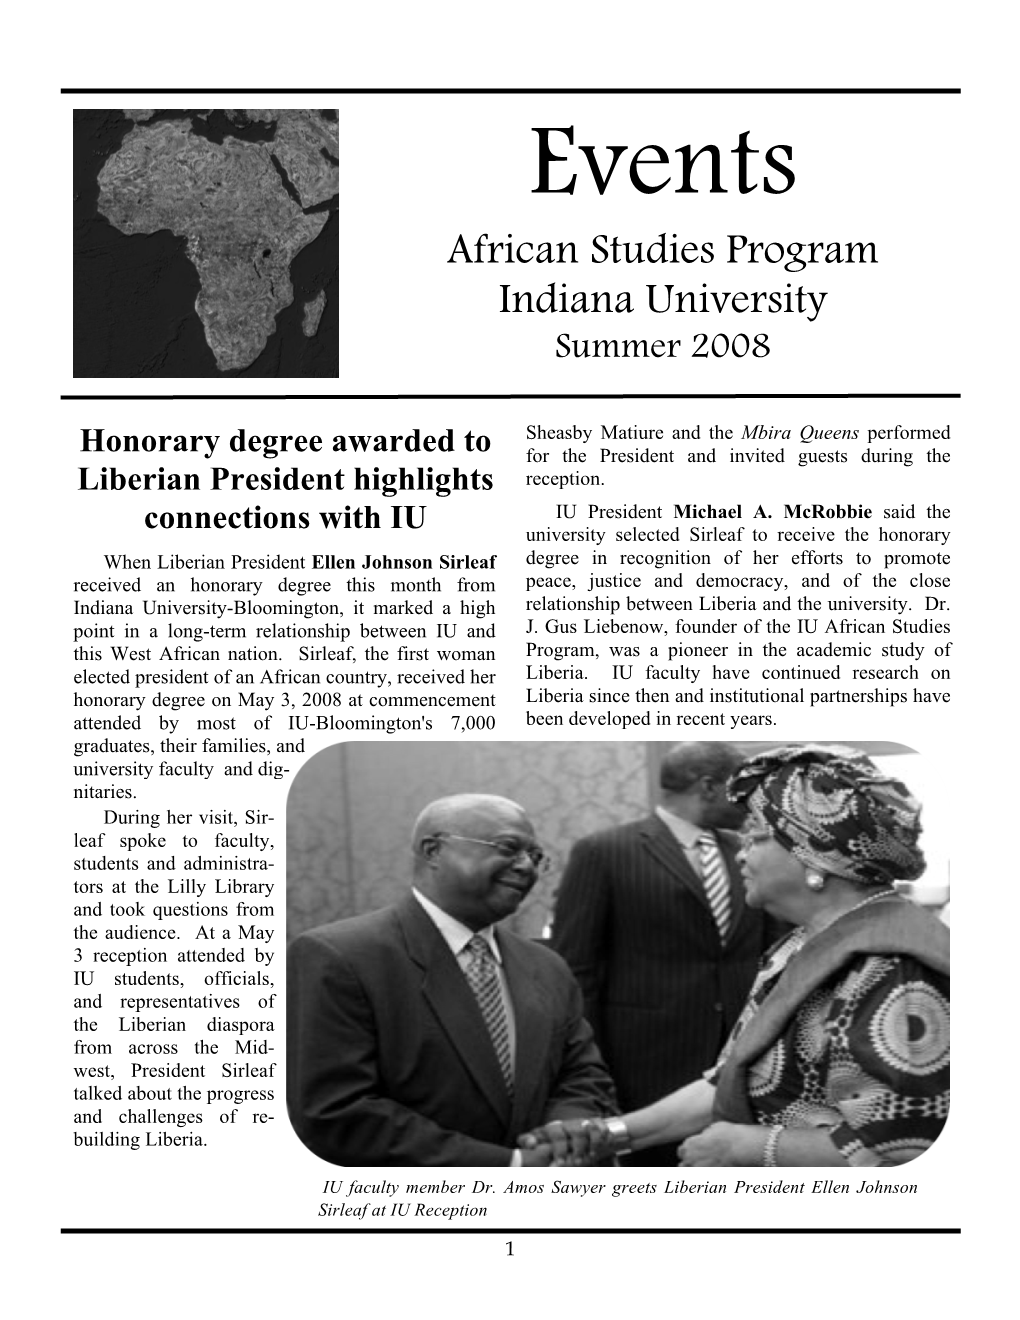 Events African Studies Program Indiana University Summer 2008